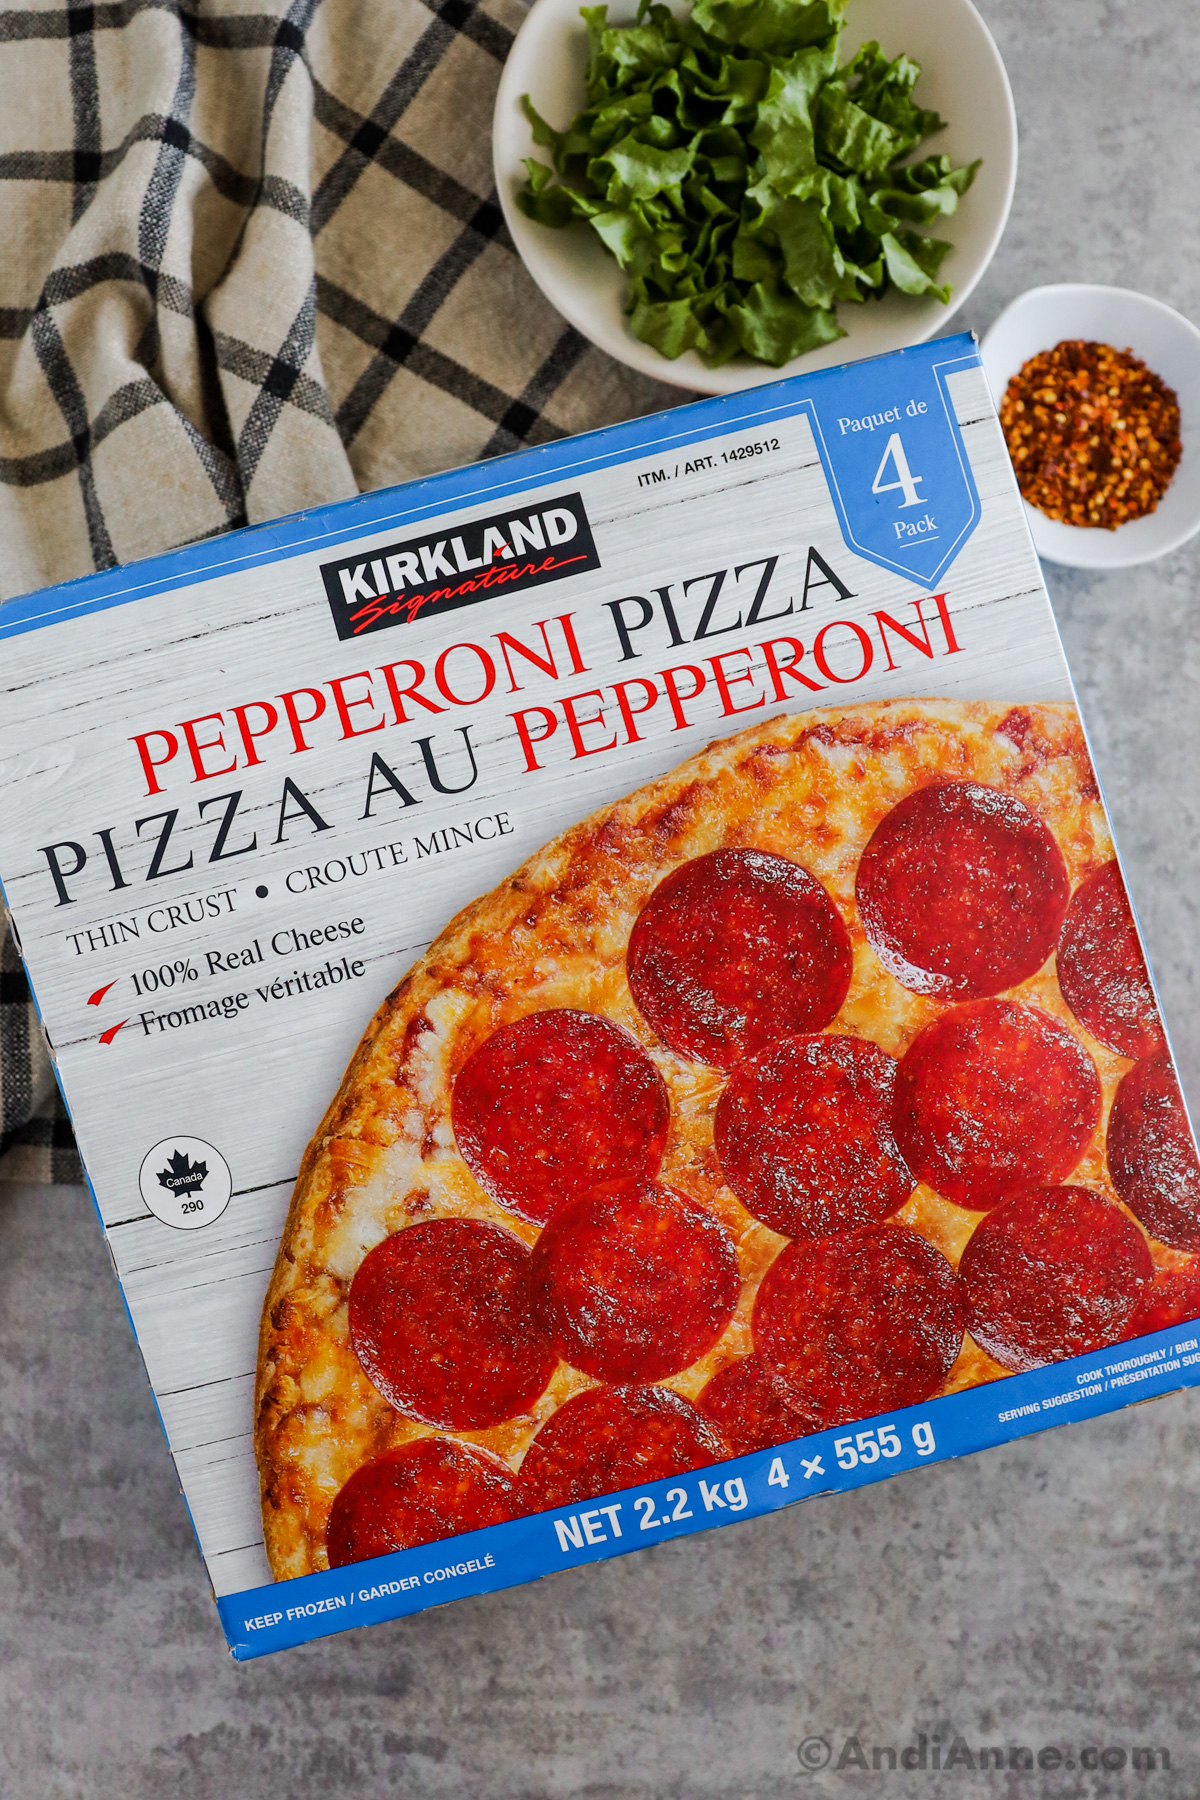 A box of kirkland signature pepperoni pizza.